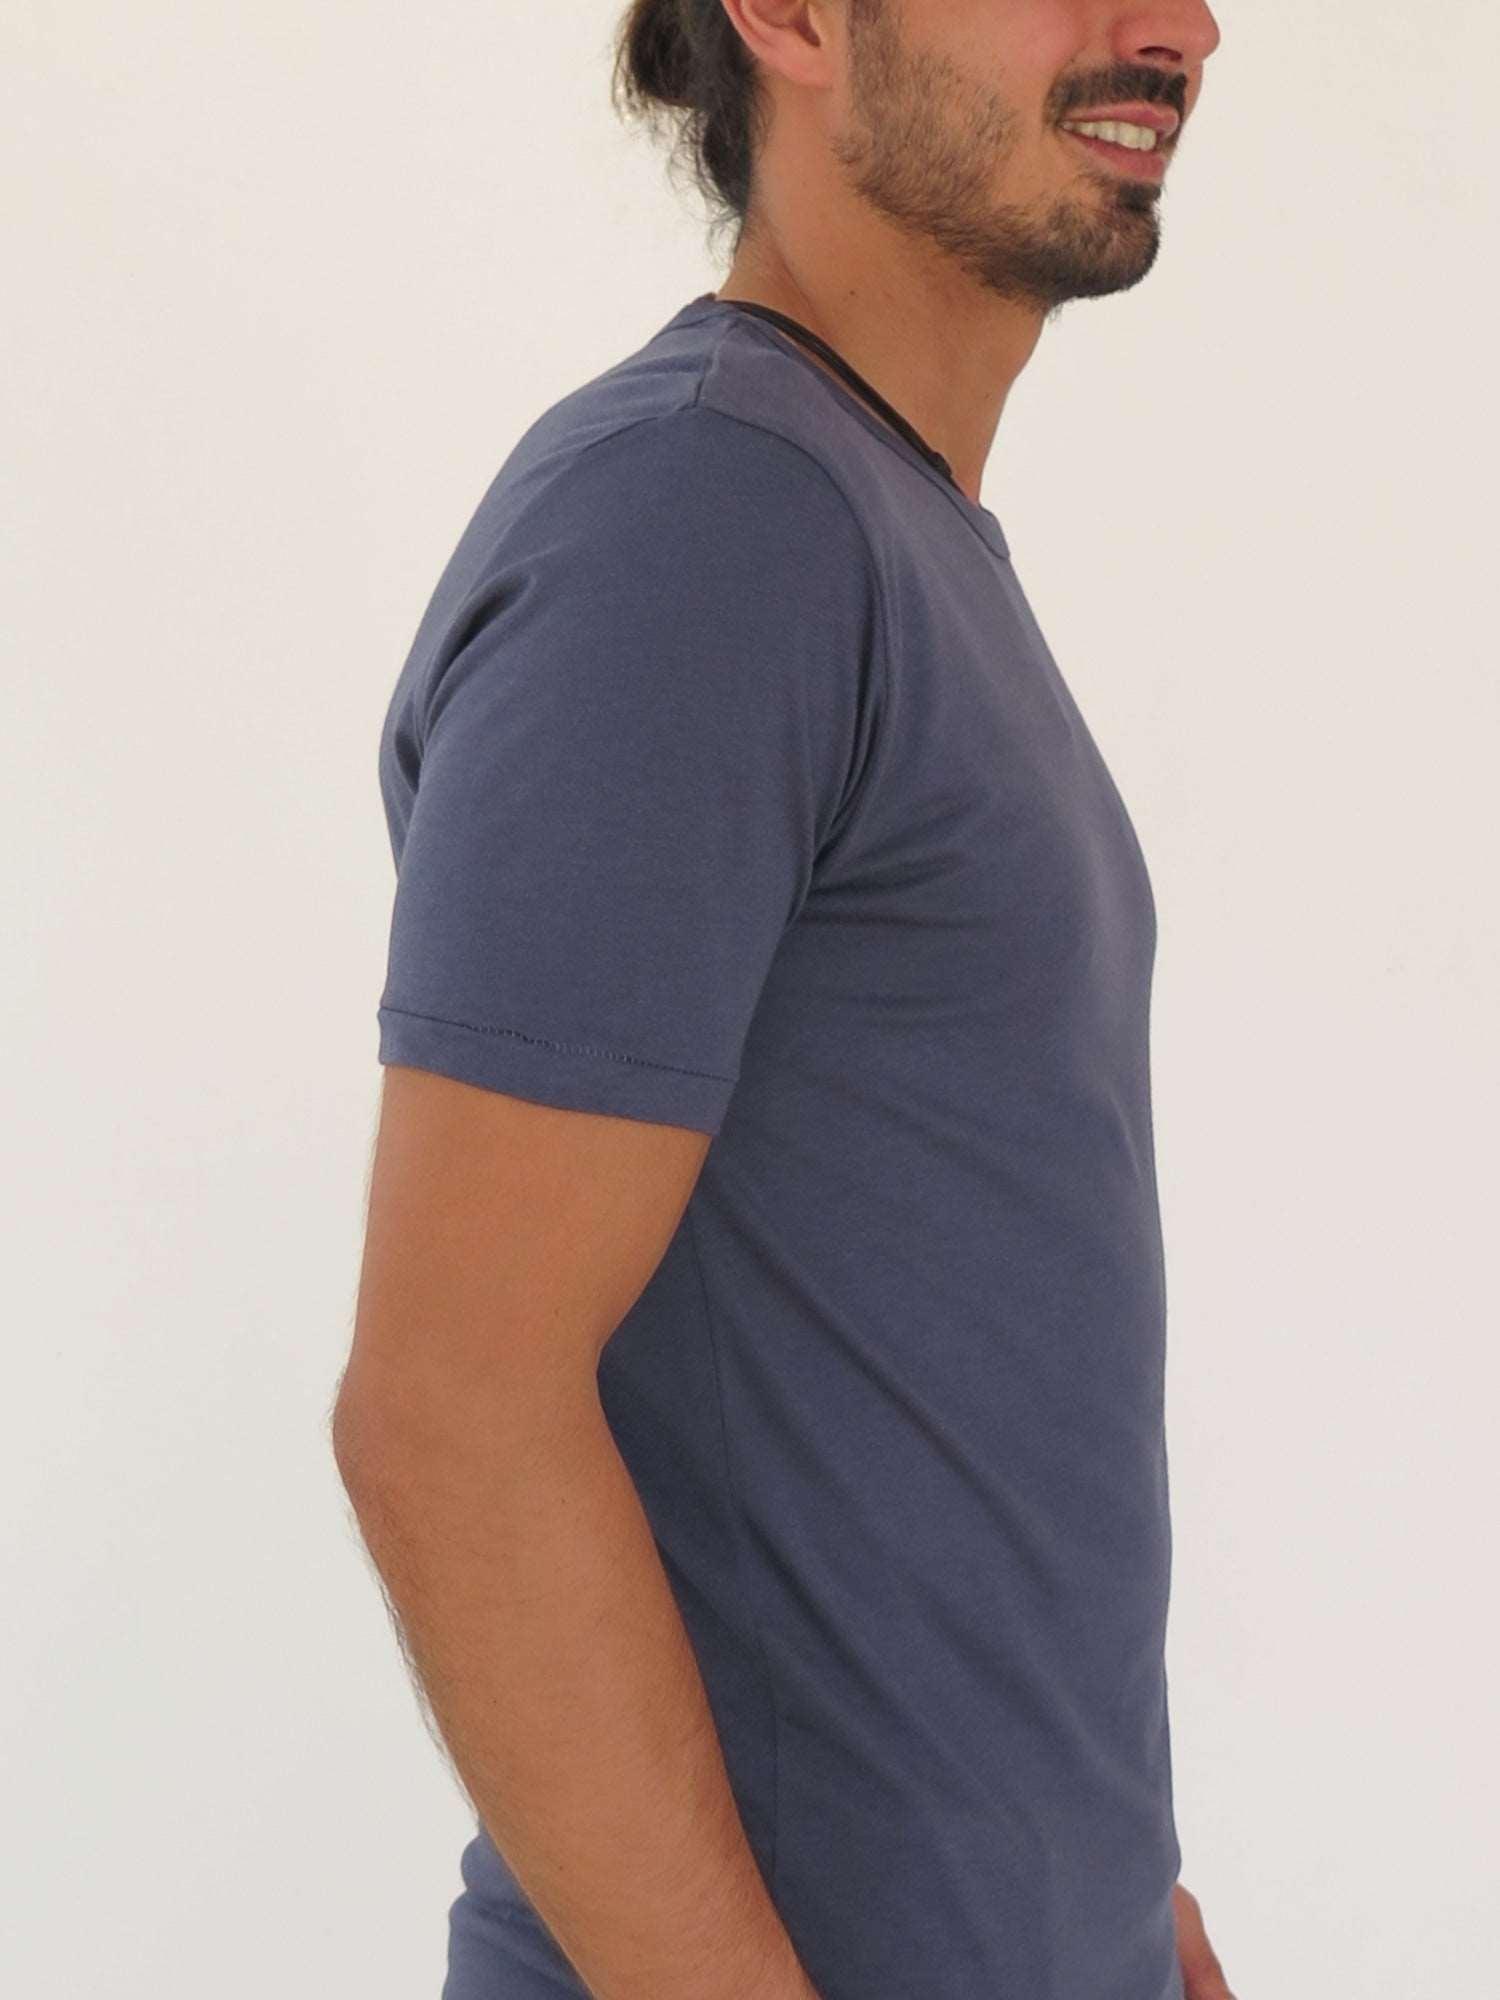 Camiseta azul denim de algodón orgánico y bambú